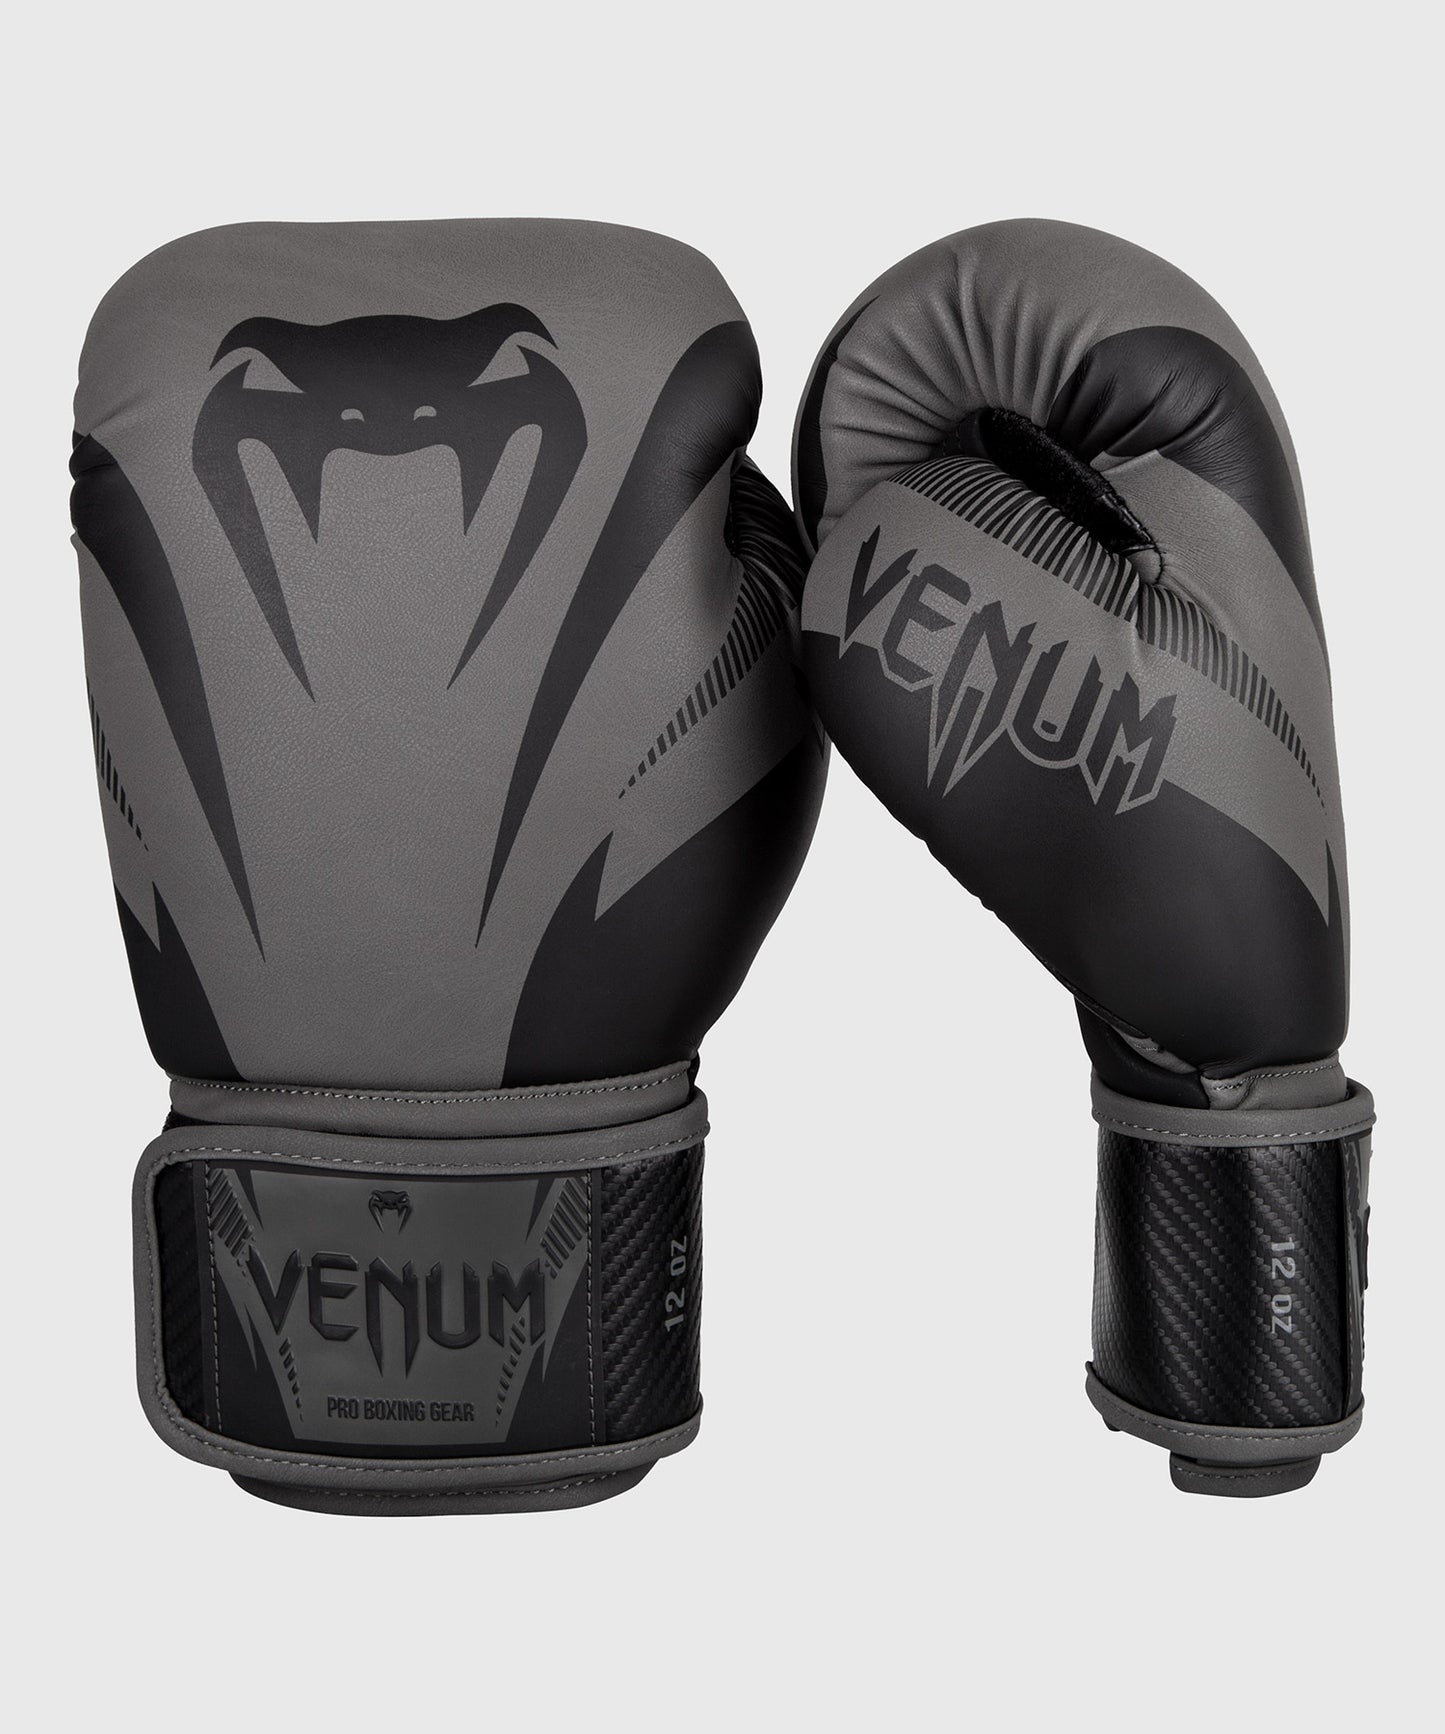 Venum Impact Boxhandschuhe - Grau/Schwarz